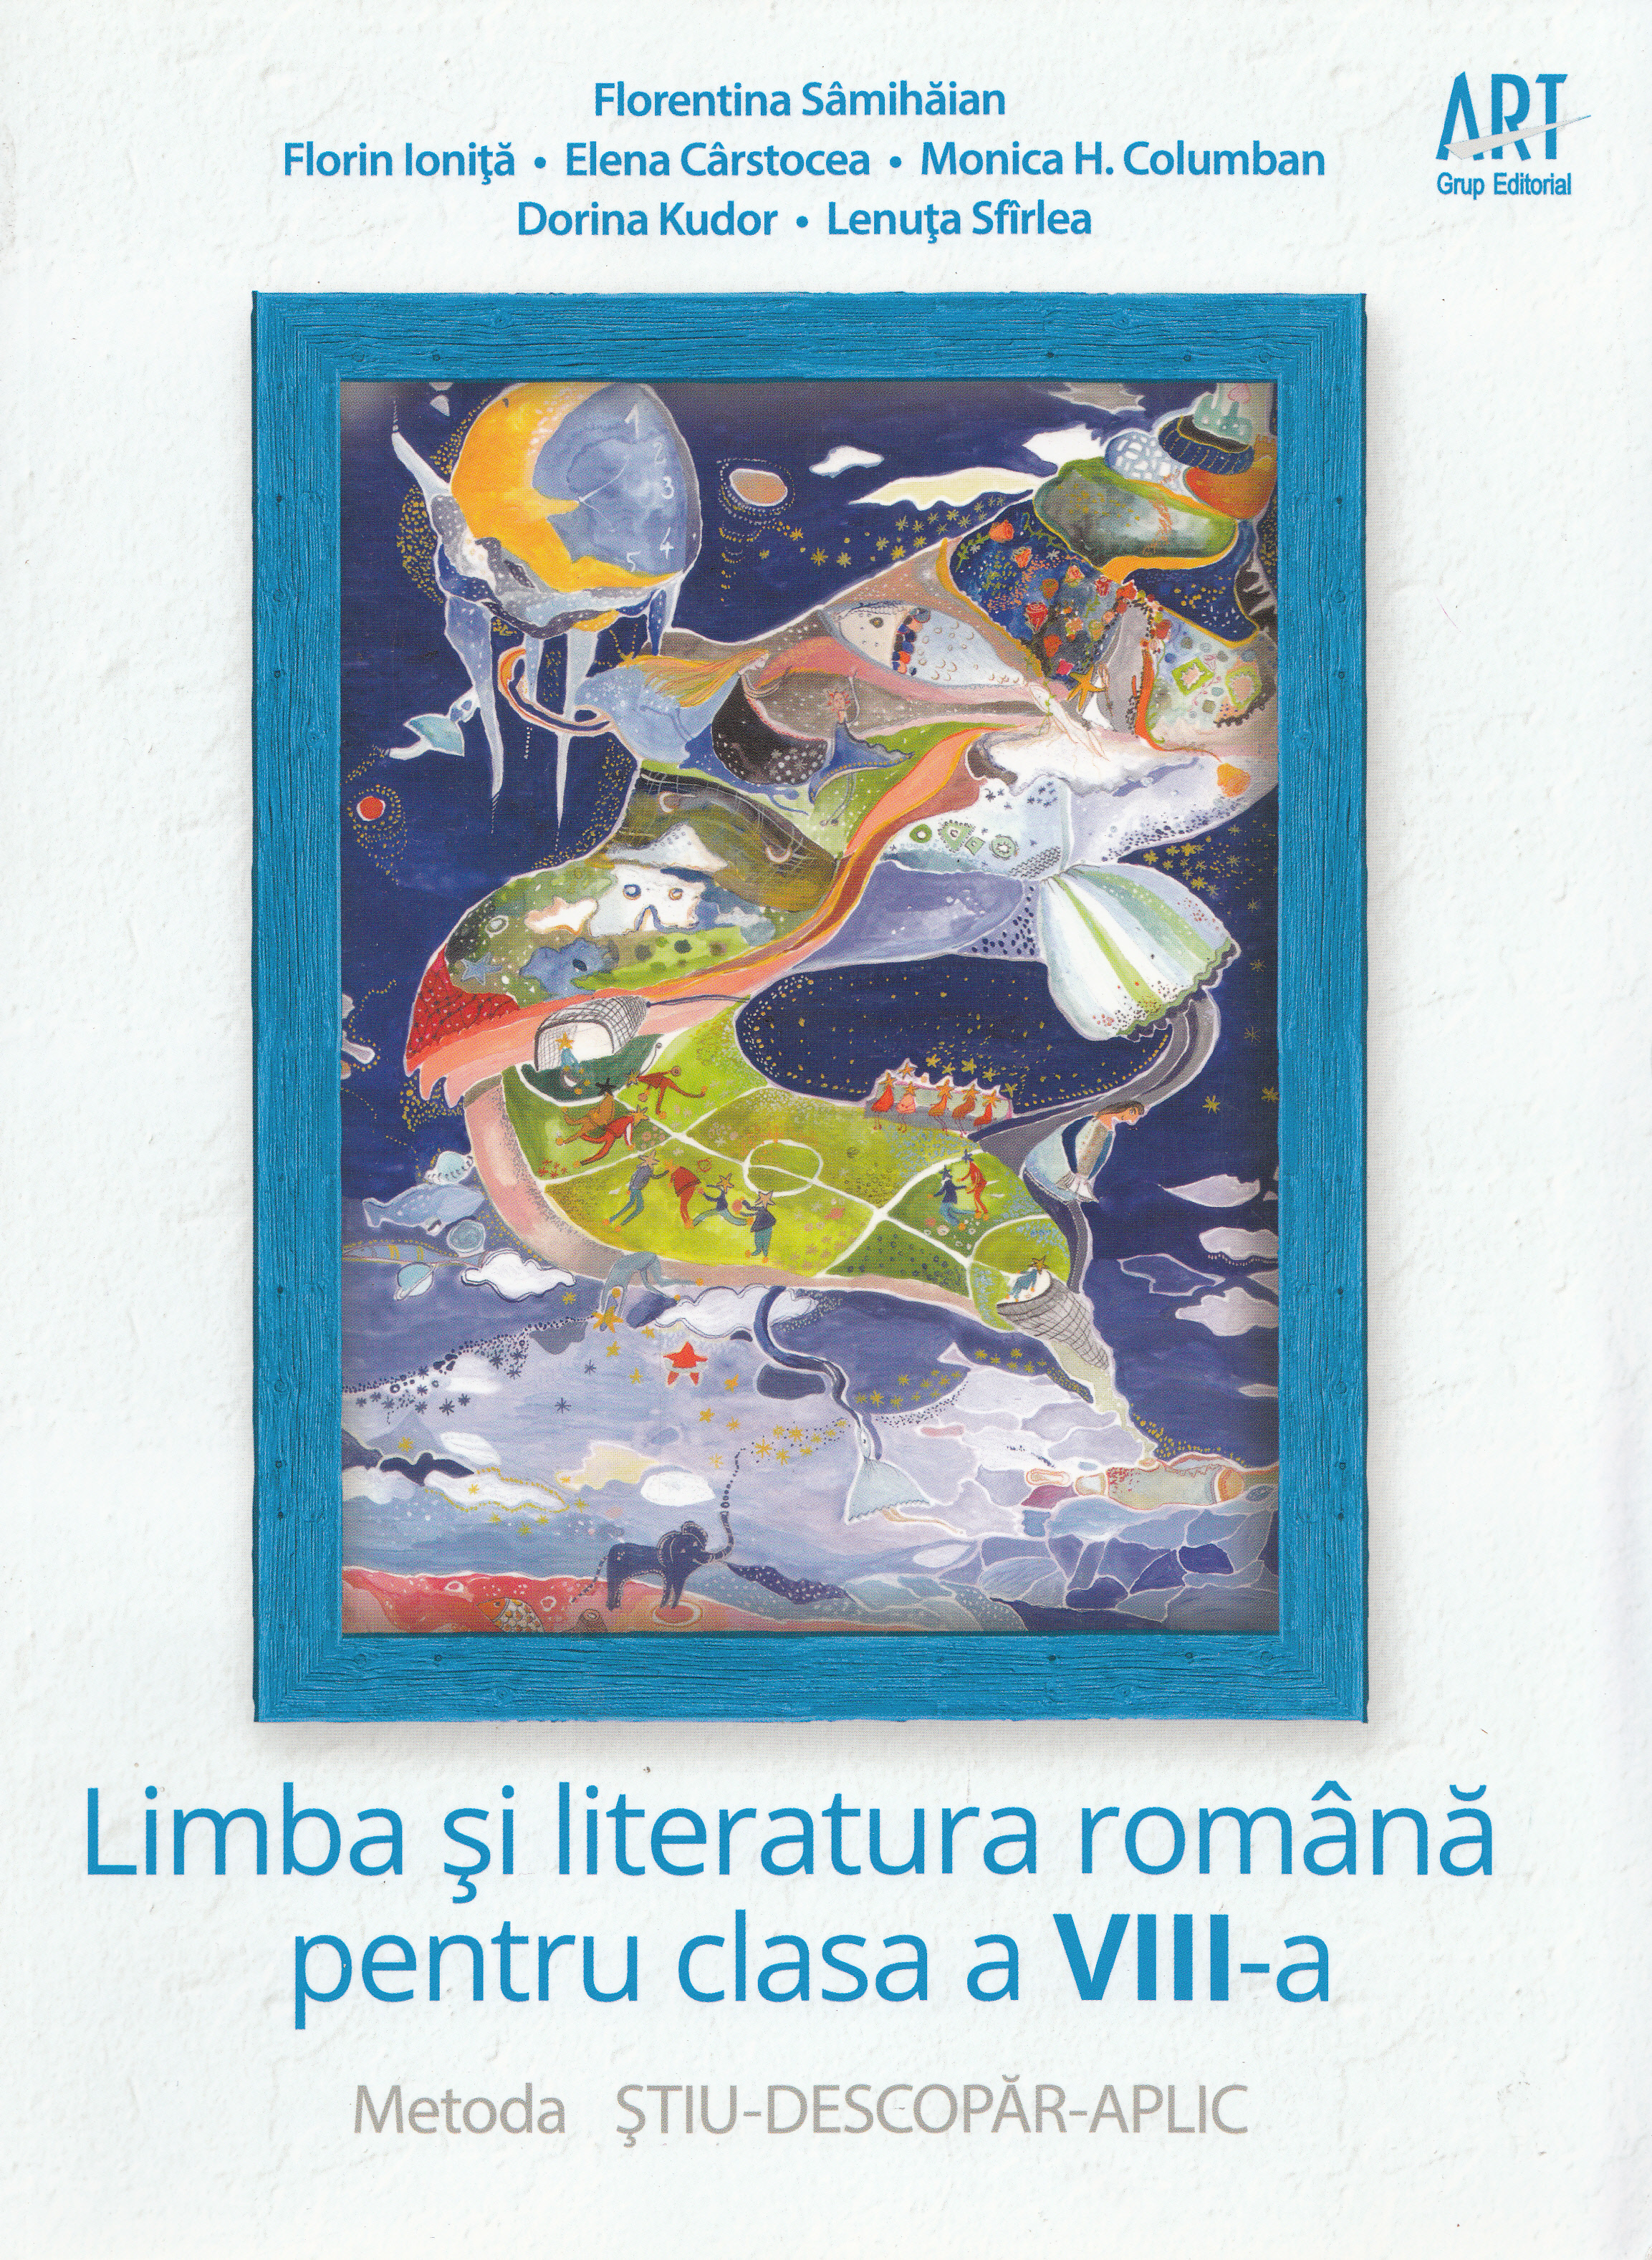 Limba si literatura romana - Clasa 8 - Metoda Stiu-Descopar-Aplic - Florentina Samihaian, Florin Ionita